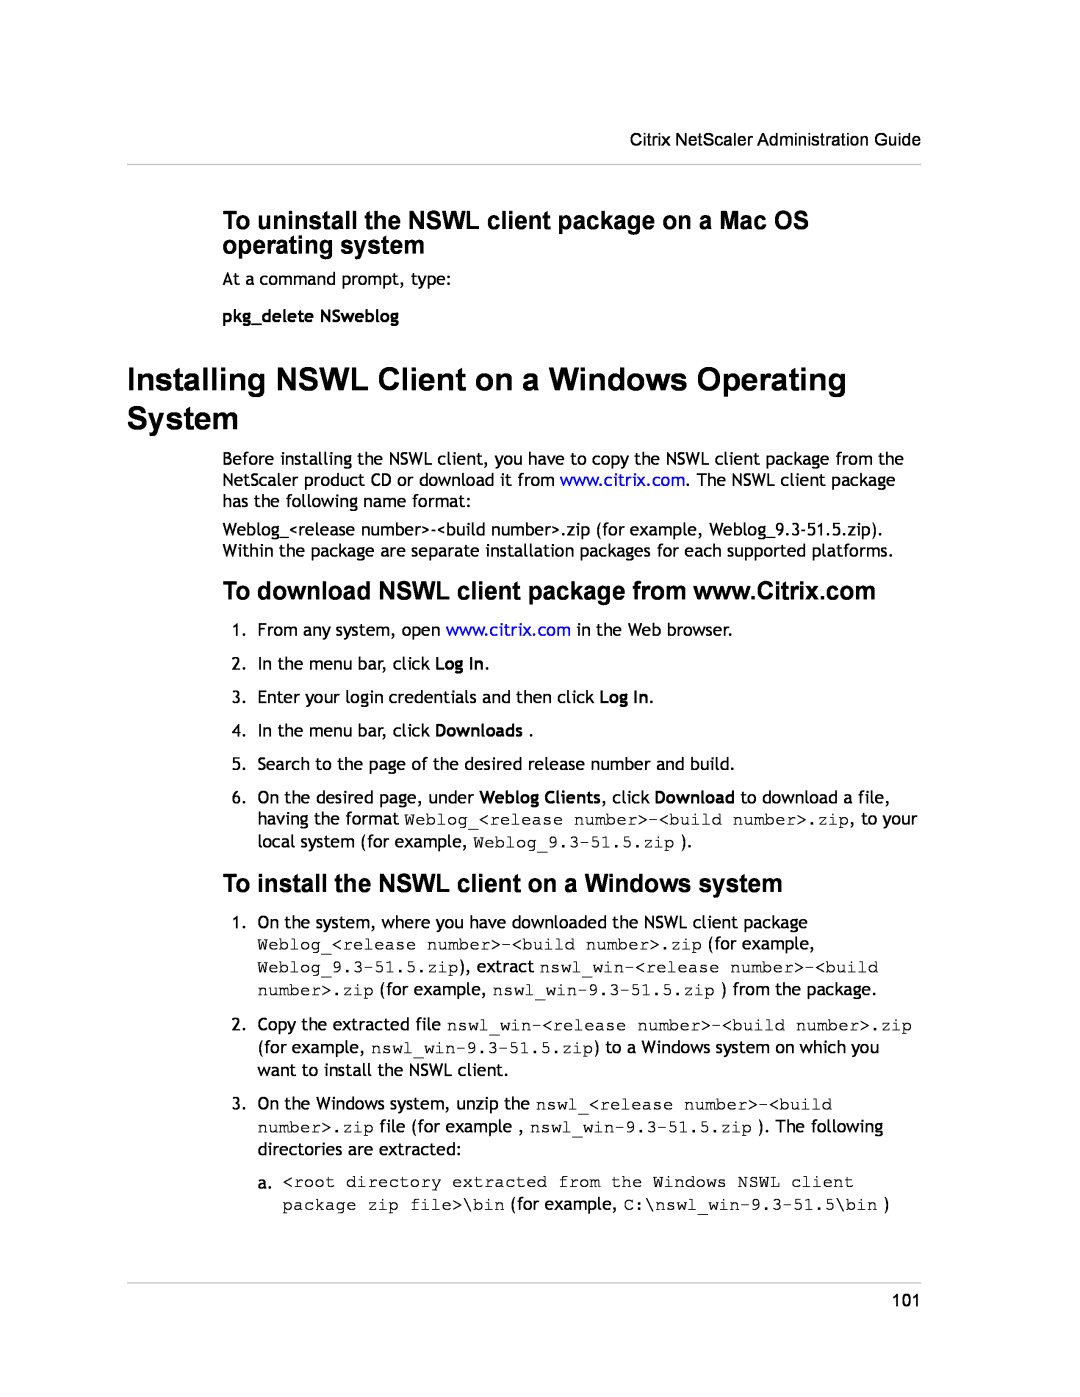 Citrix Systems CITRIX NETSCALER 9.3 manual Installing NSWL Client on a Windows Operating System, pkgdelete NSweblog 